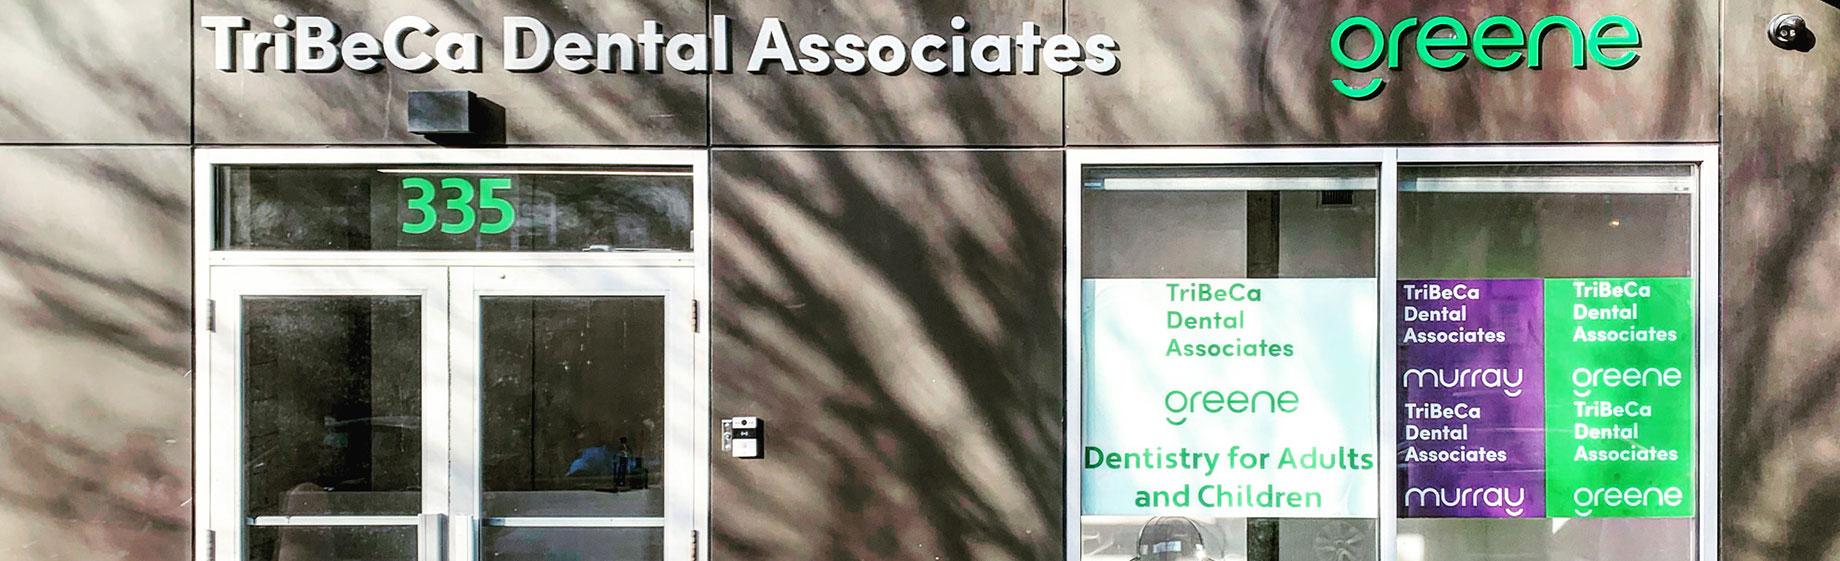 Tribeca Dental Associates PC - Green front view